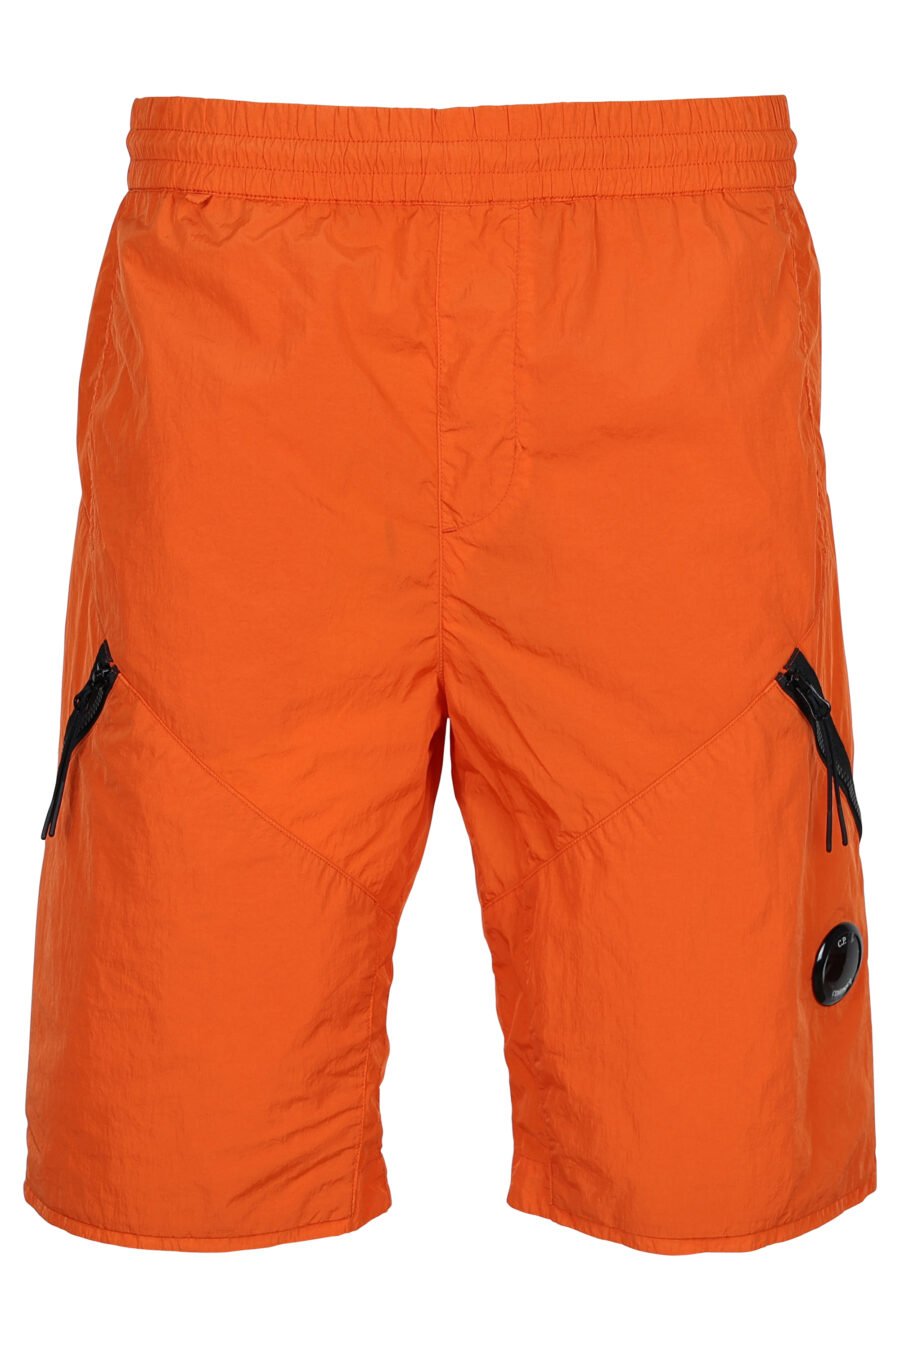 Pantalón corto naranja con cremallera diagonal y logo lente - 7620943518290